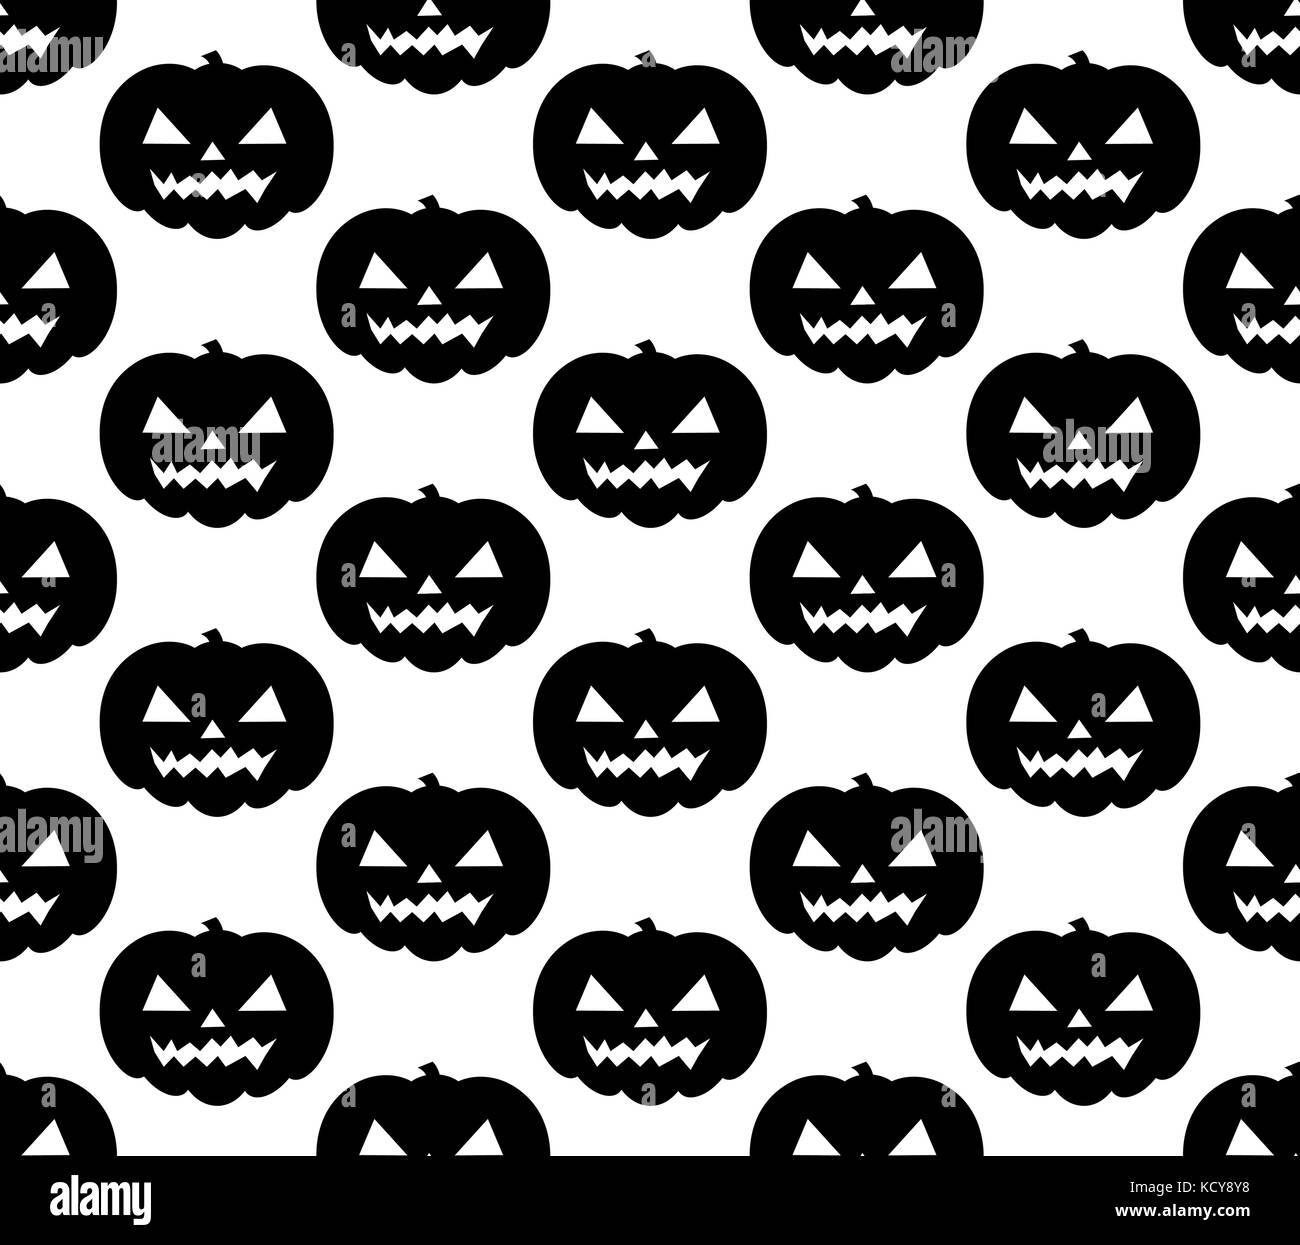 Halloween pumpkin seamless pattern. Scary black silhouette repeating texture, endless background. Vetor illustrationn. Stock Vector